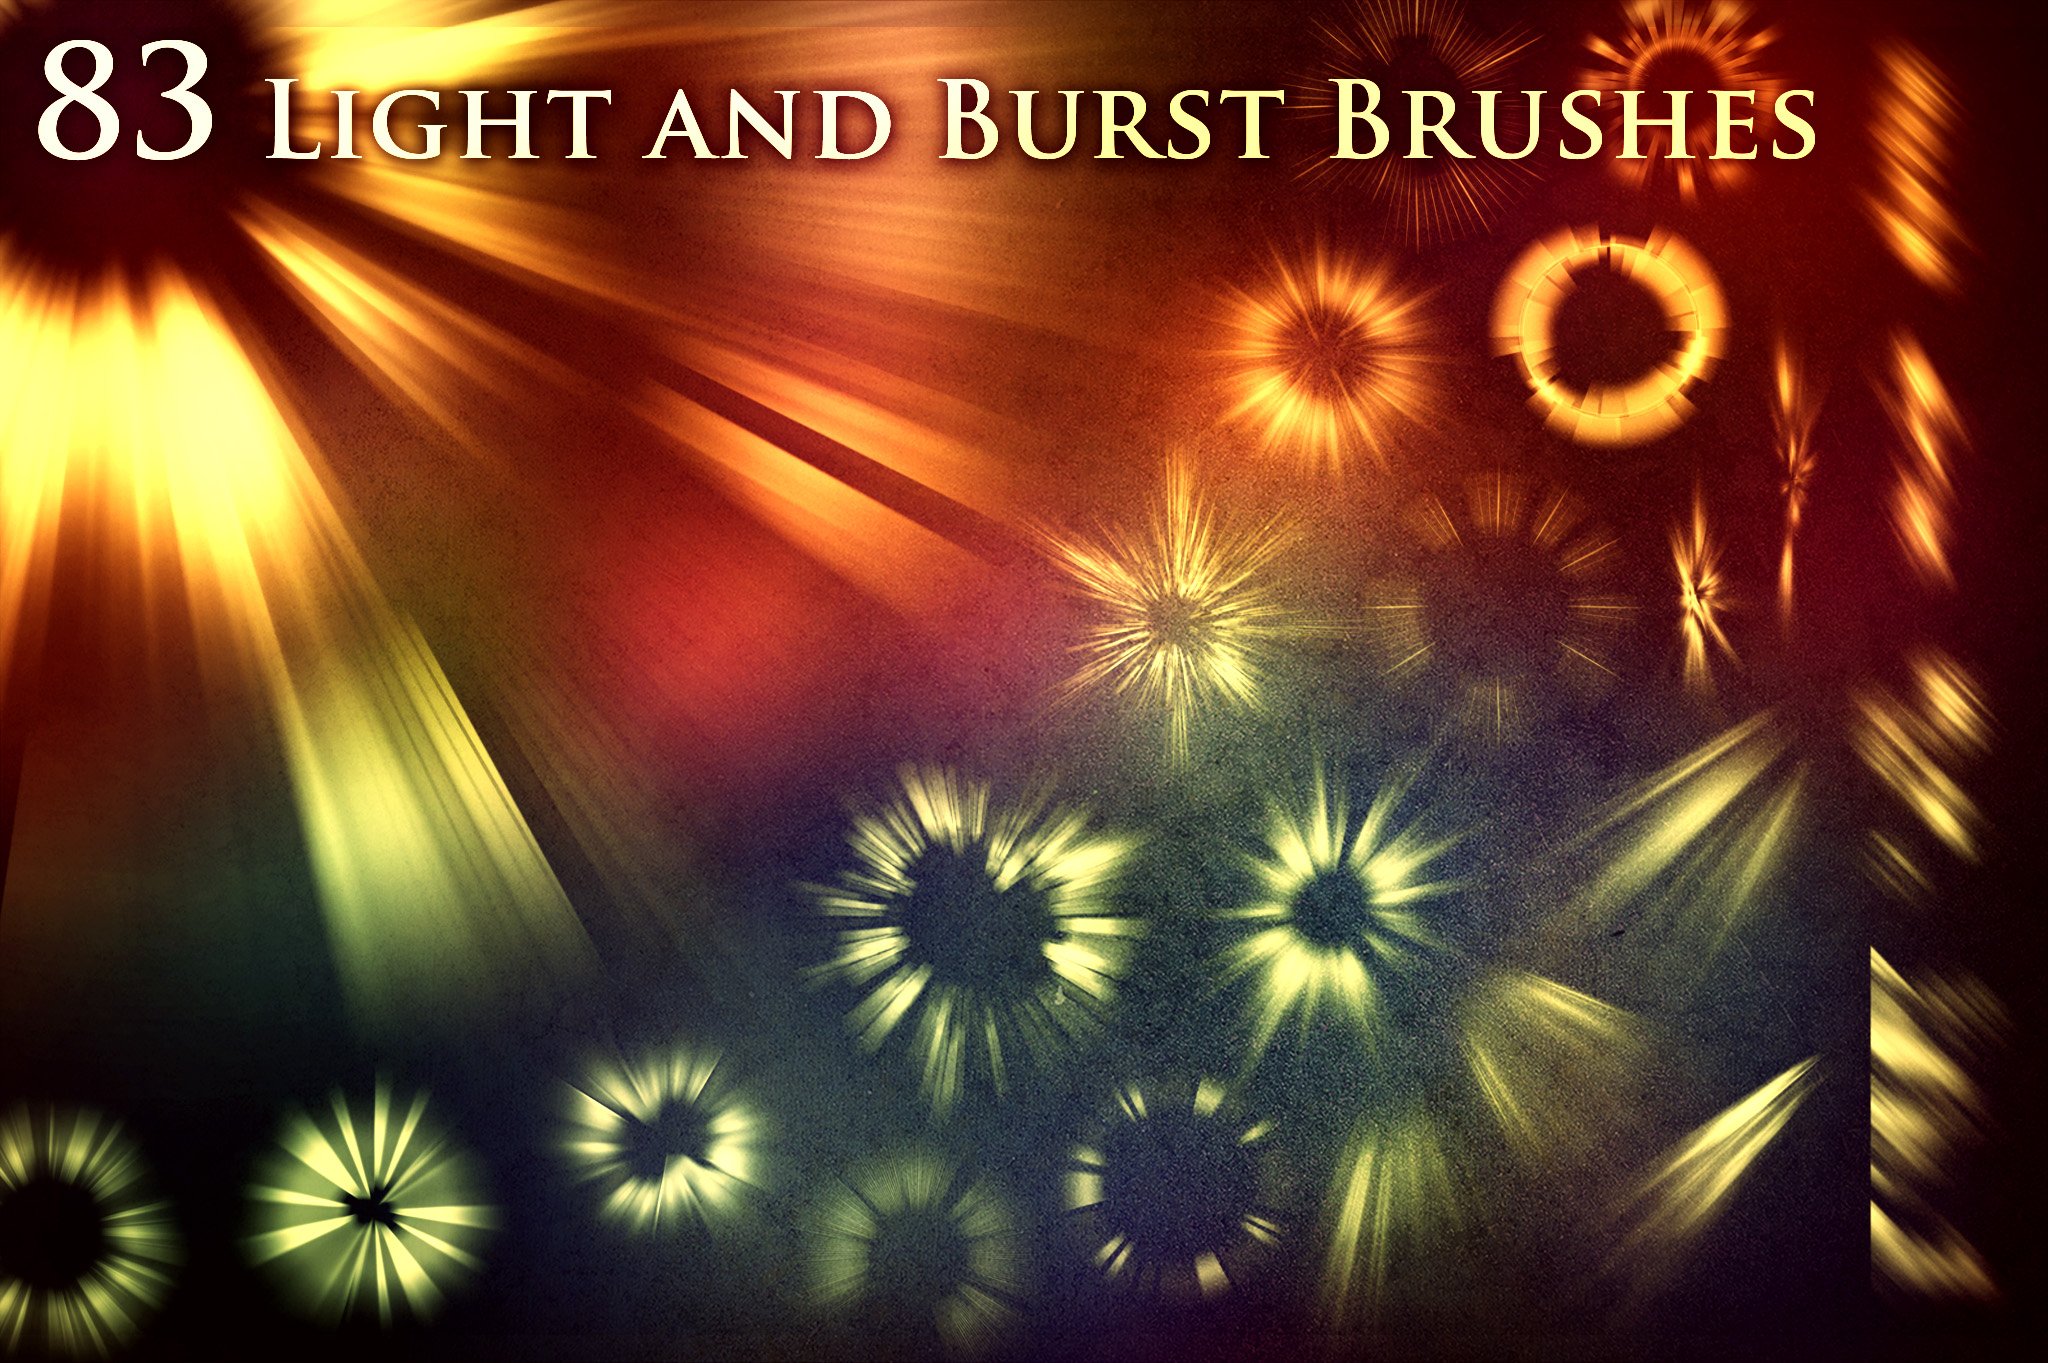 lightandburst brushes 336